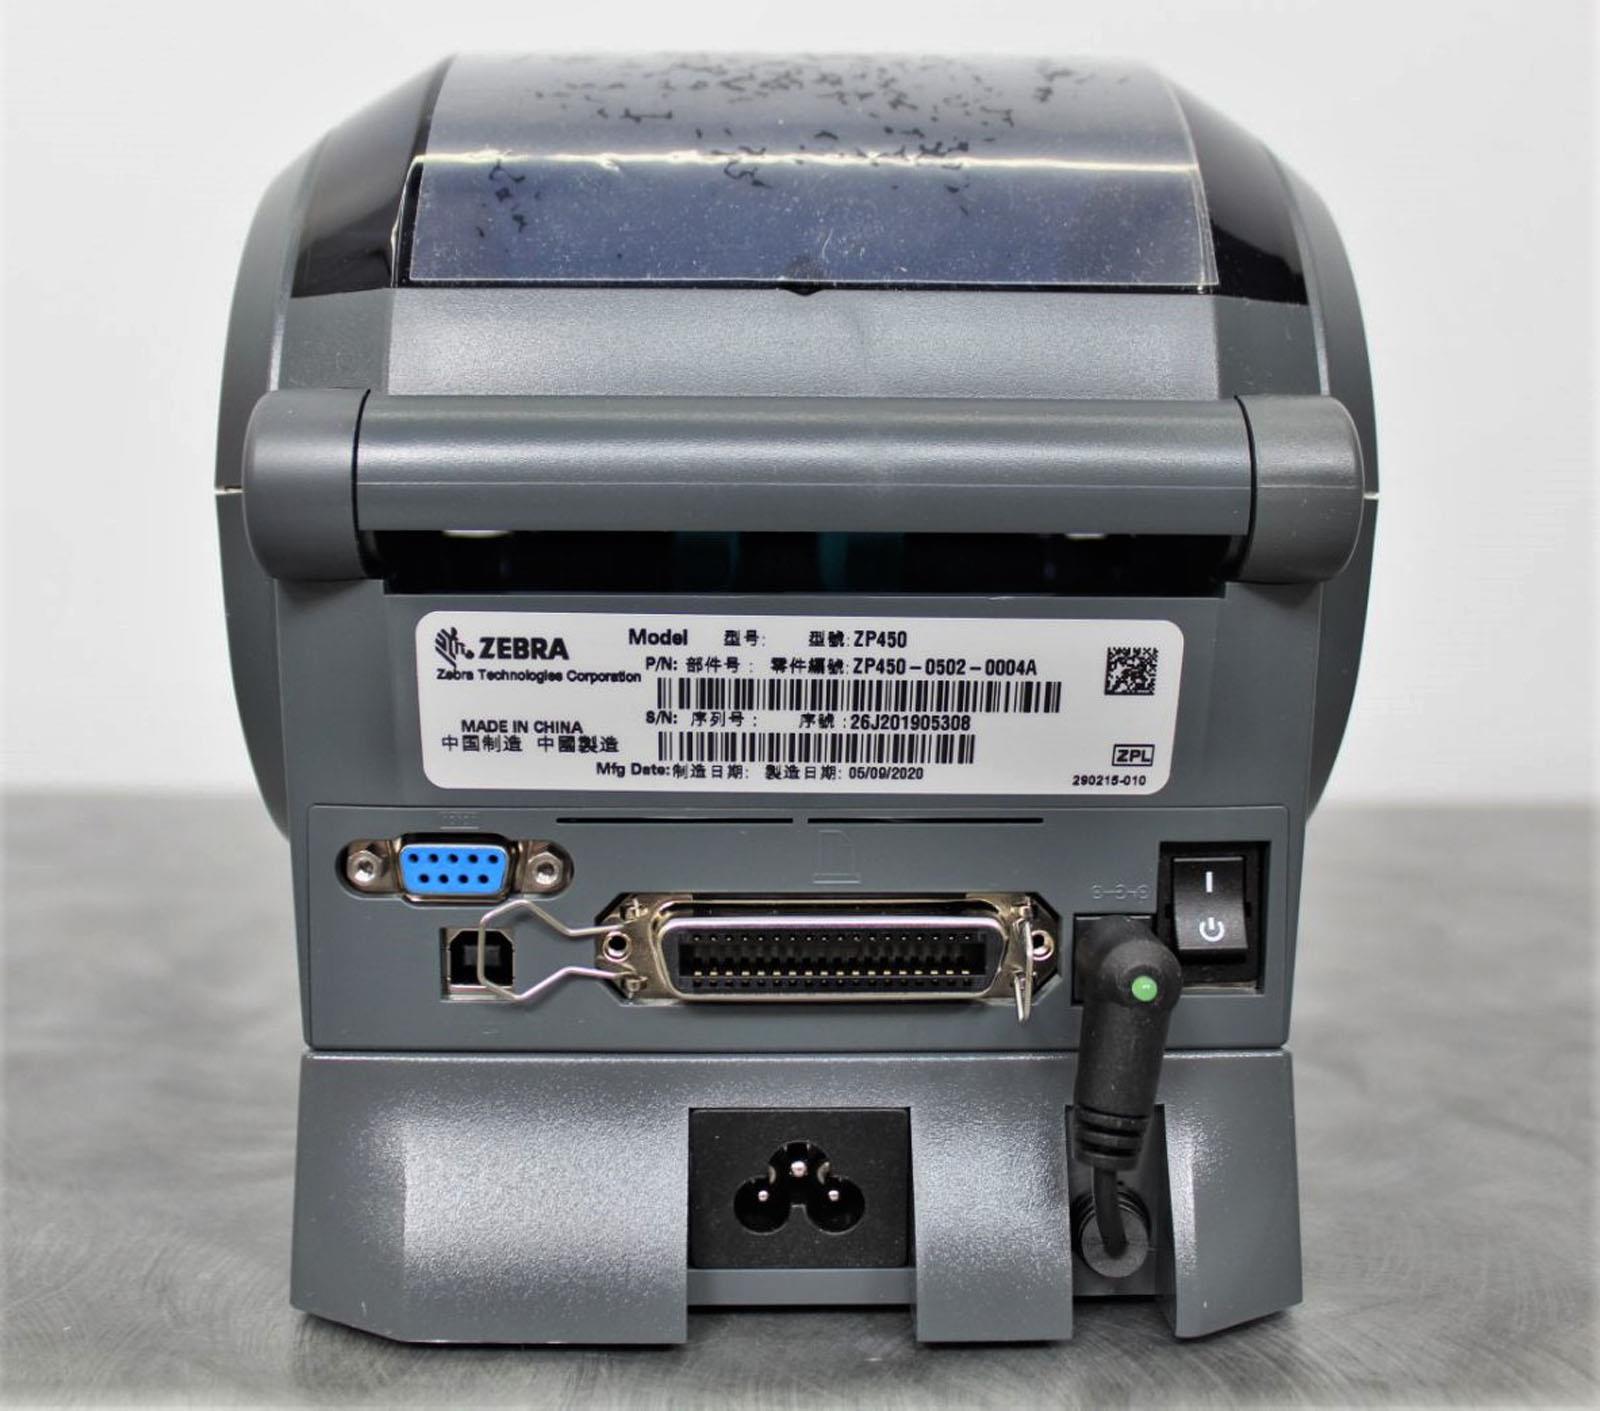 Zebra Zp450 Ctp Thermal Label Printer New In Box Zp450 0502 0004a With Warranty Ebay 5140